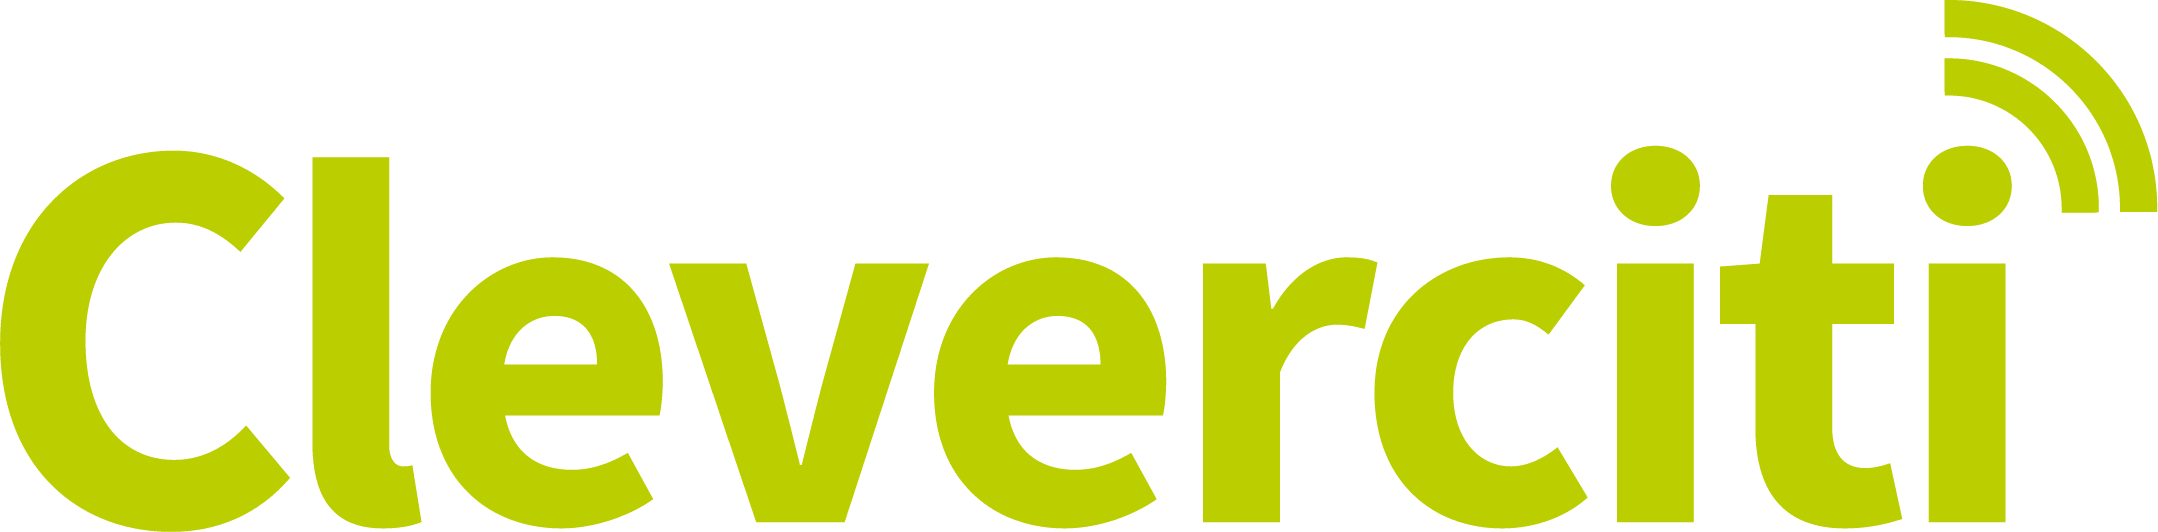 Cleverciti logo